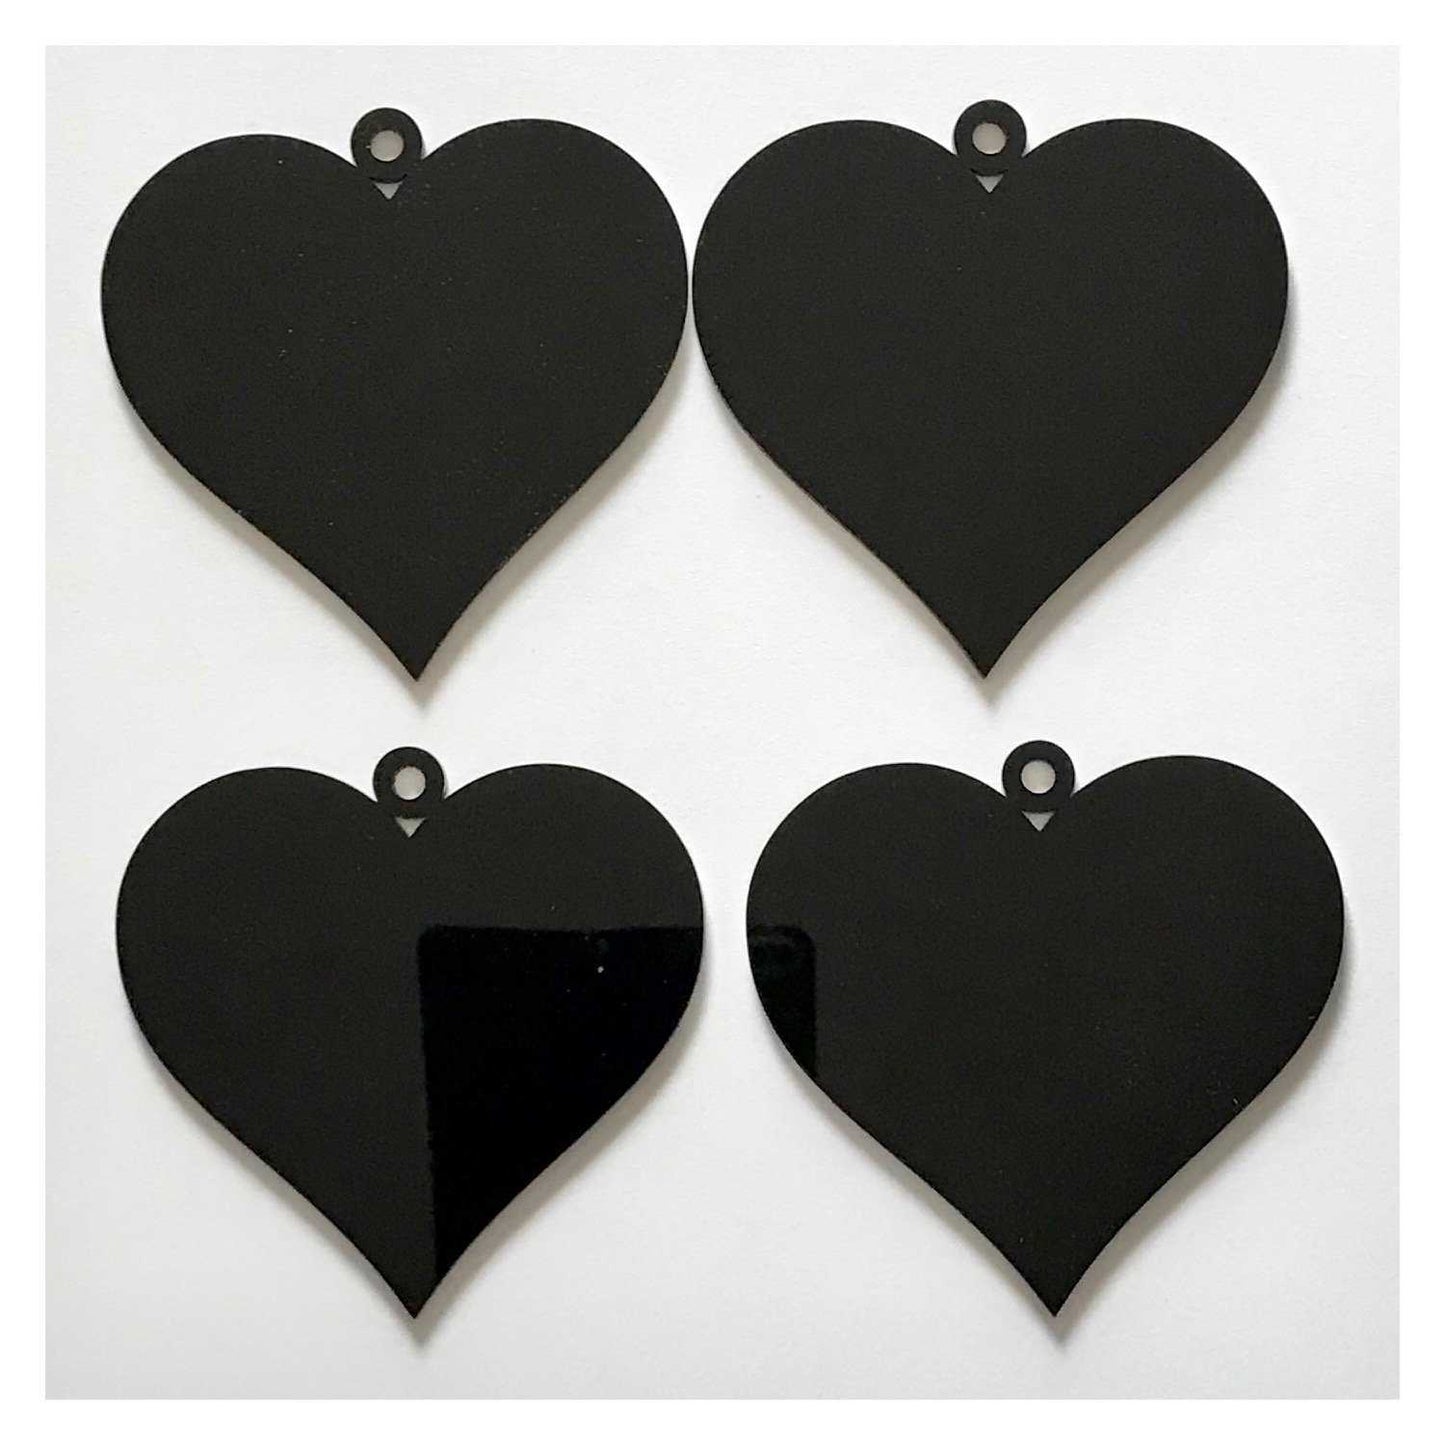 Heart Love Wedding Xmas Party Decoration Hanging Set Of 3 Black Plastic Acrylic Country Decor Garden